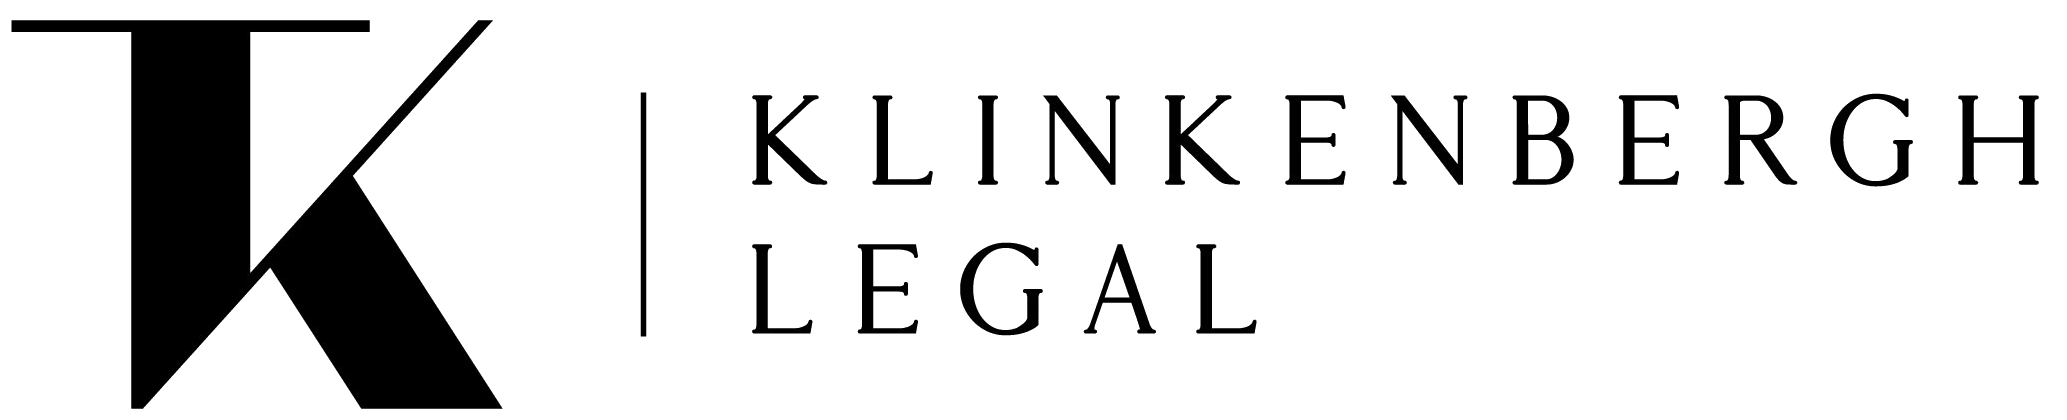 tk legal logo